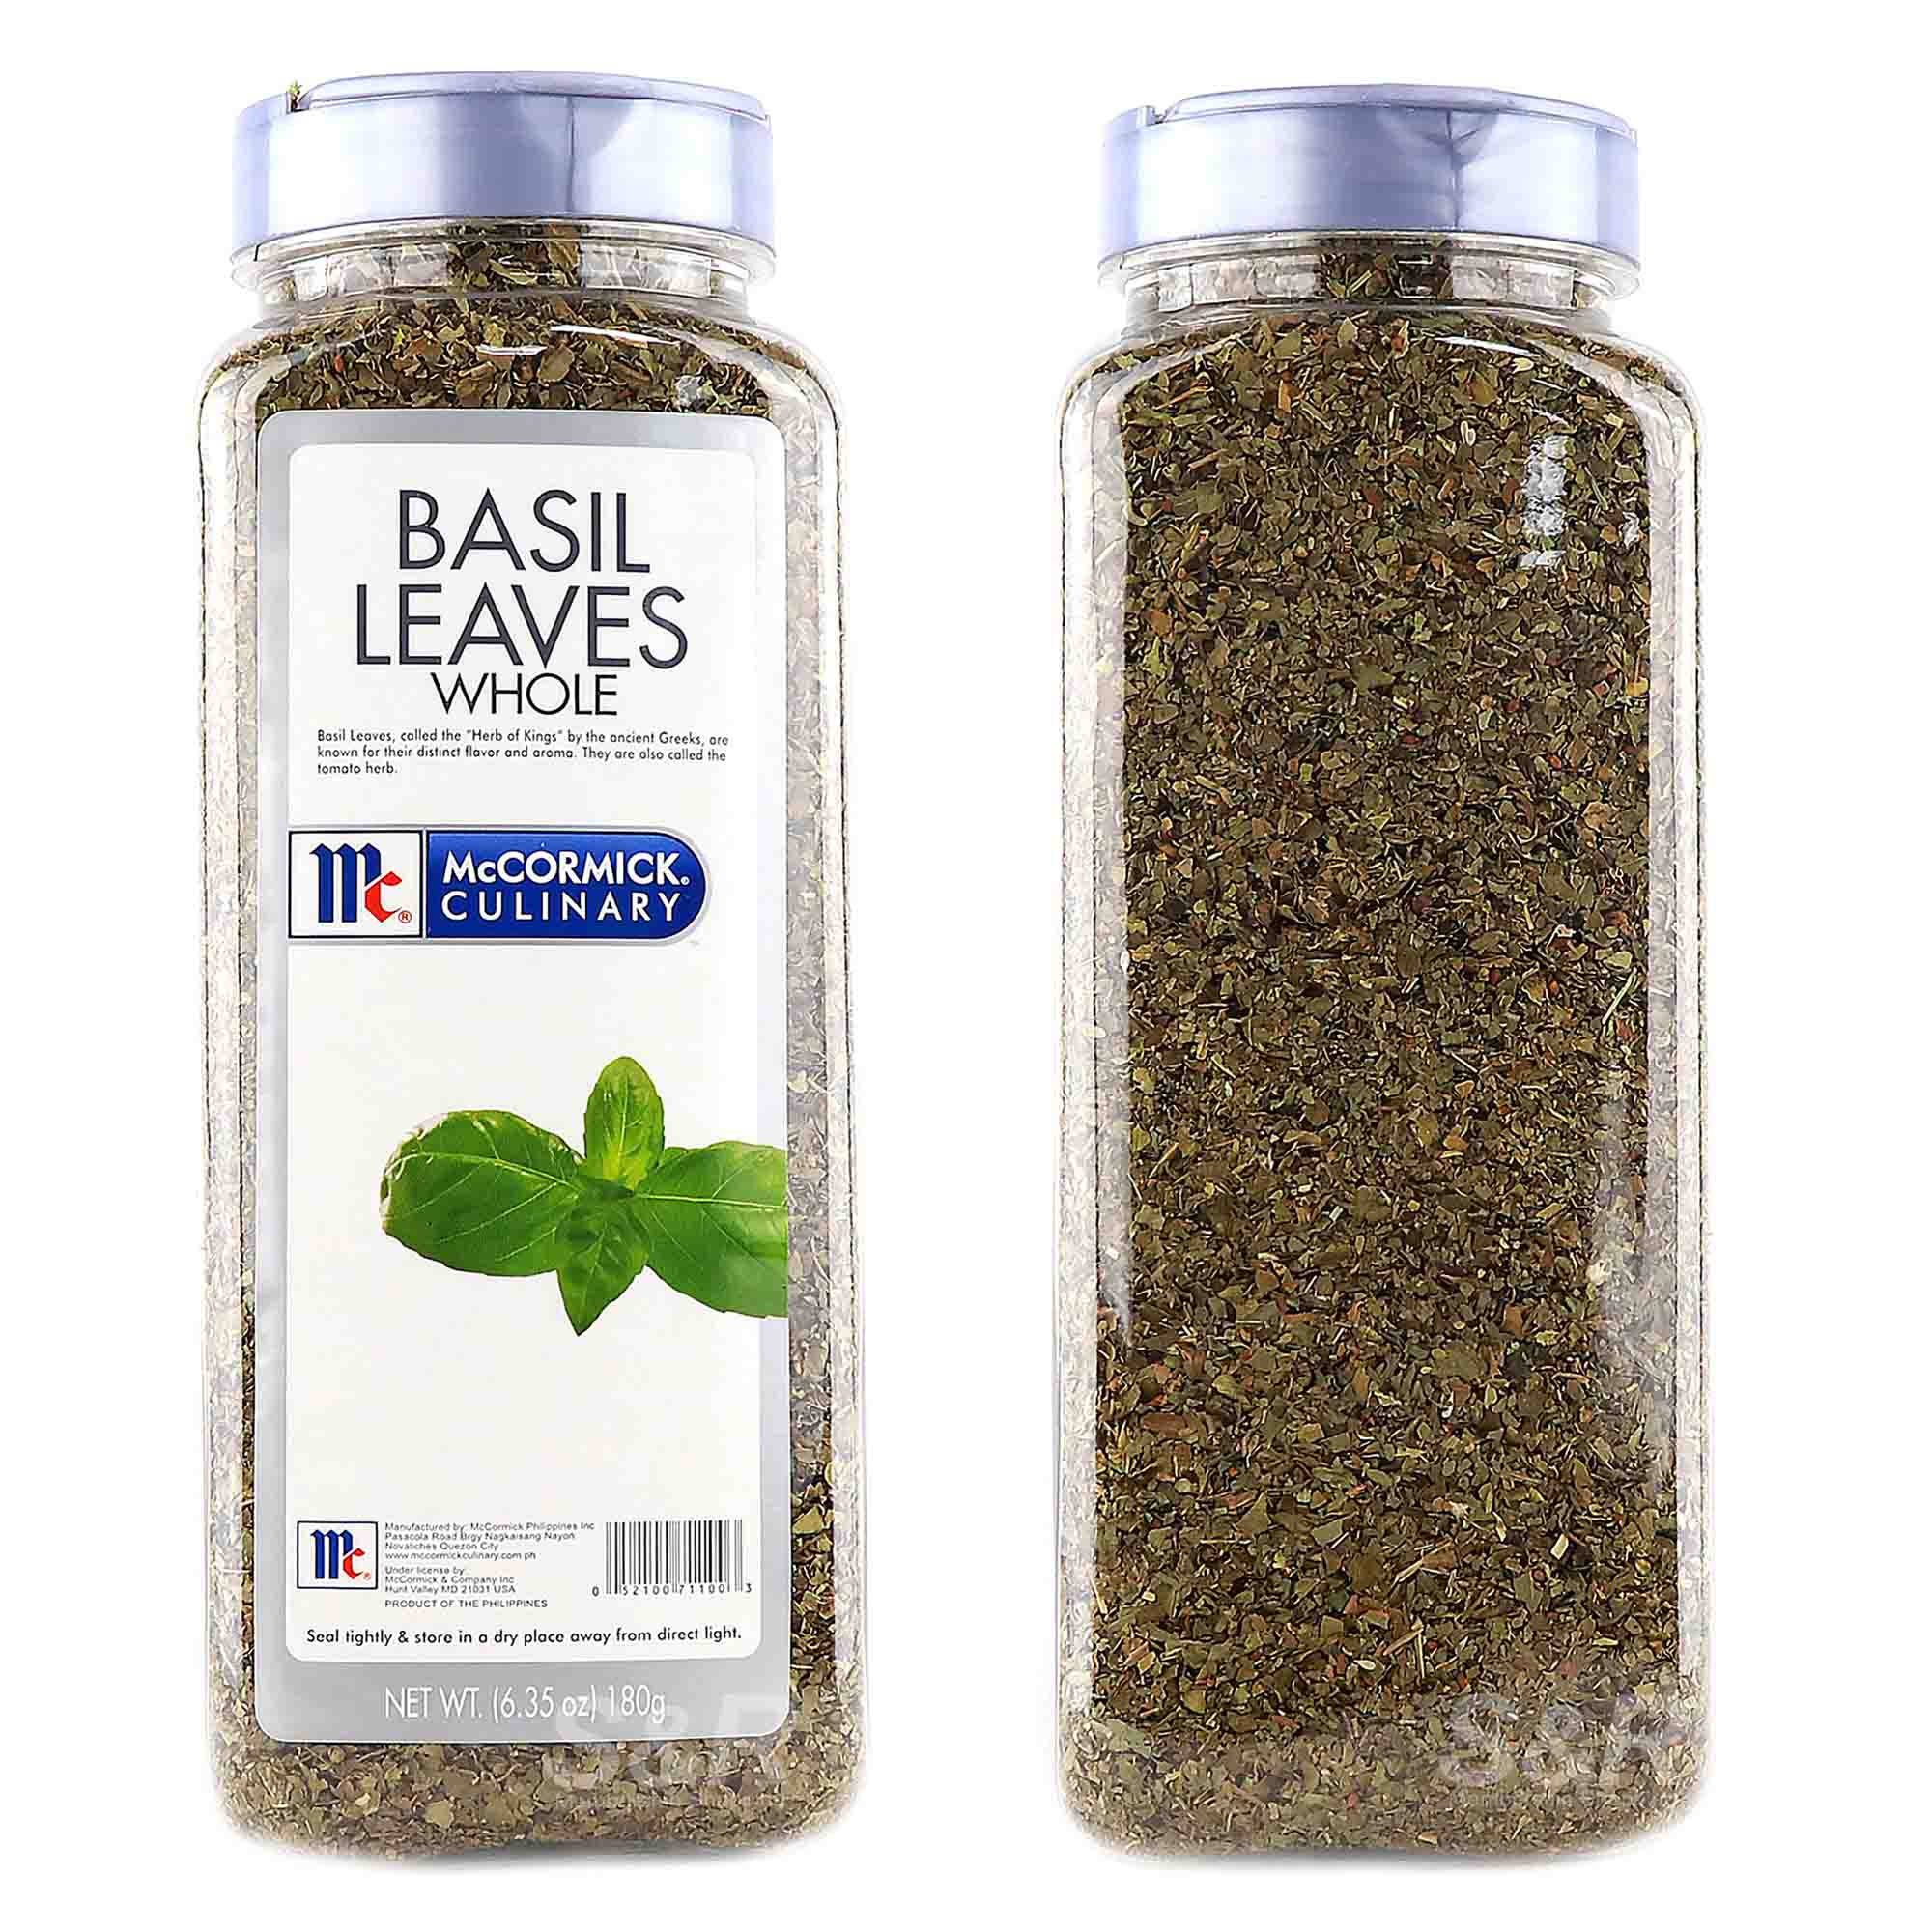 Basil Leaves